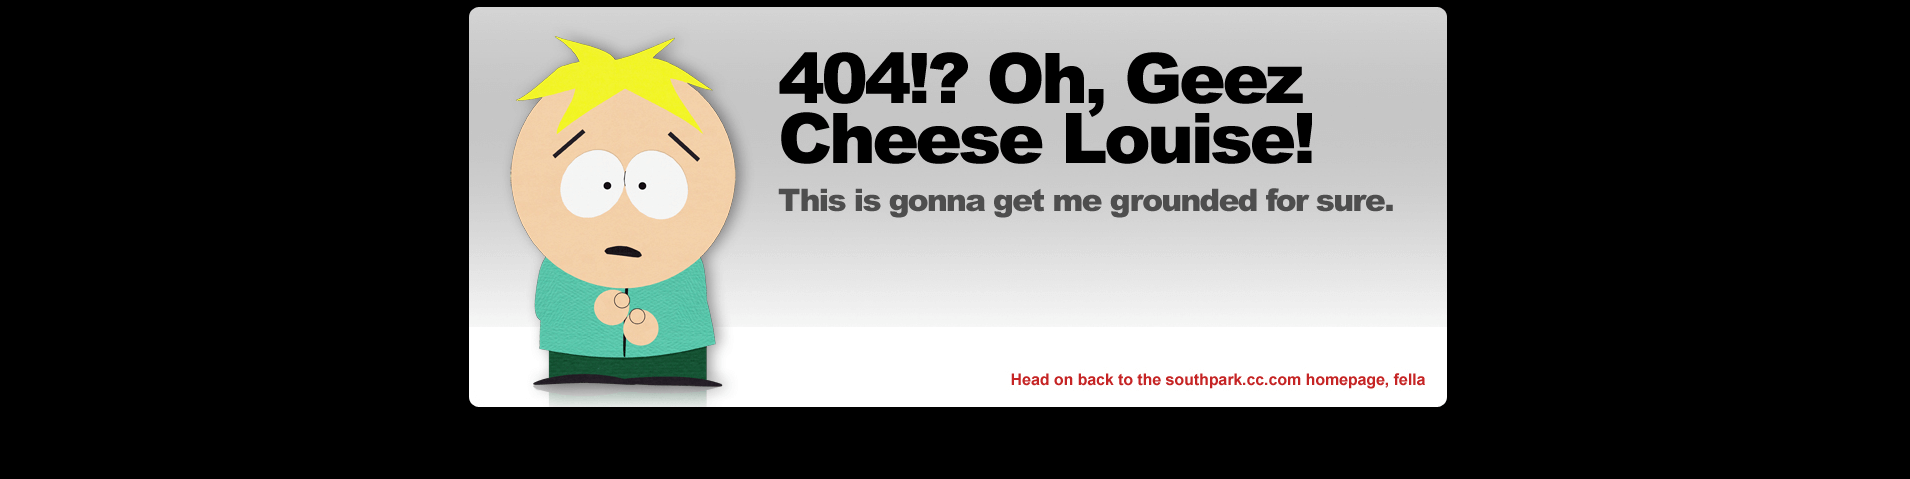 South Park’s 404 page